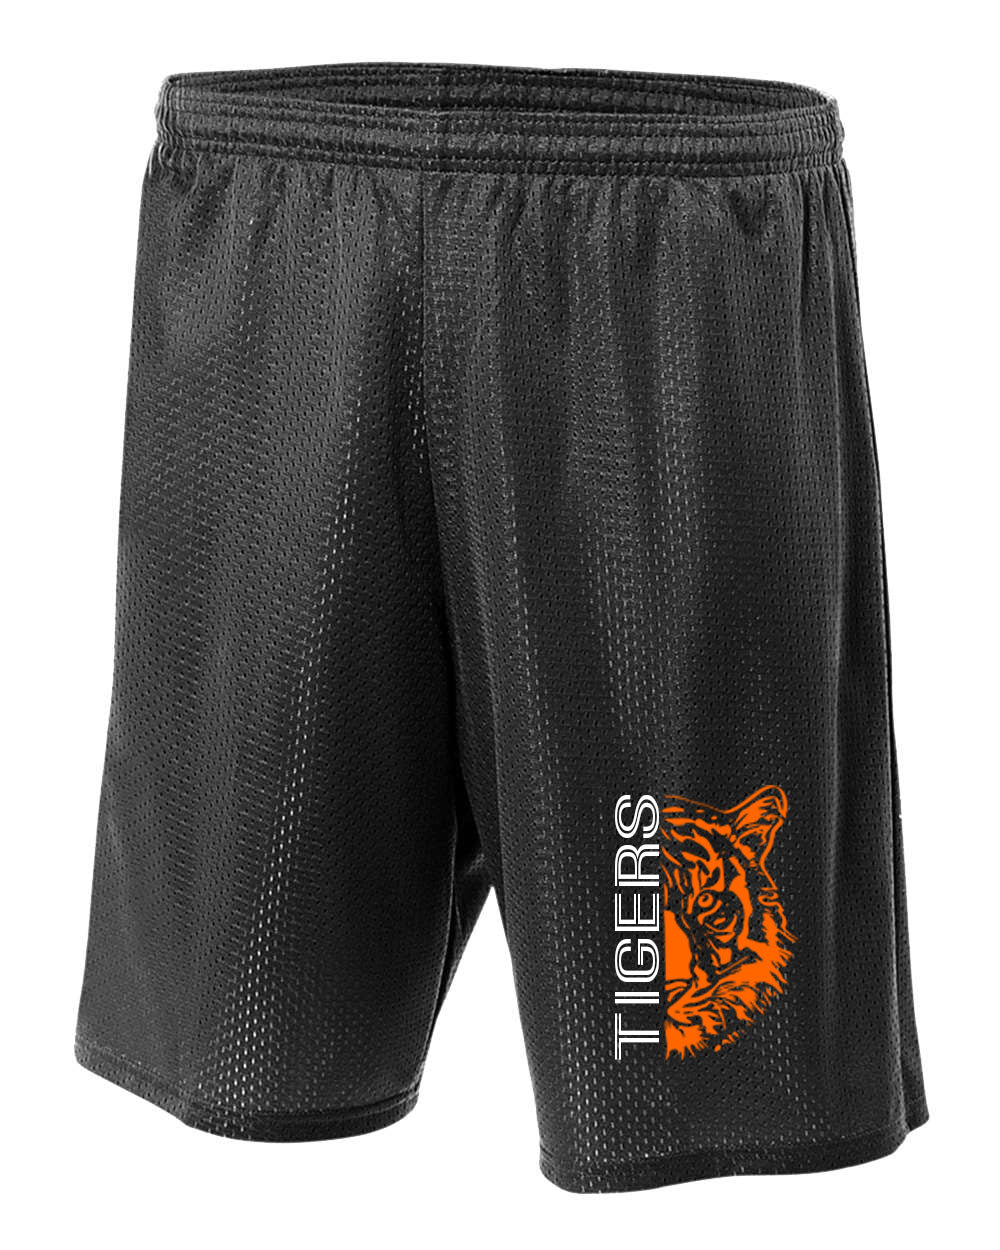 Lafayette Tigers Design 6 Mesh Shorts